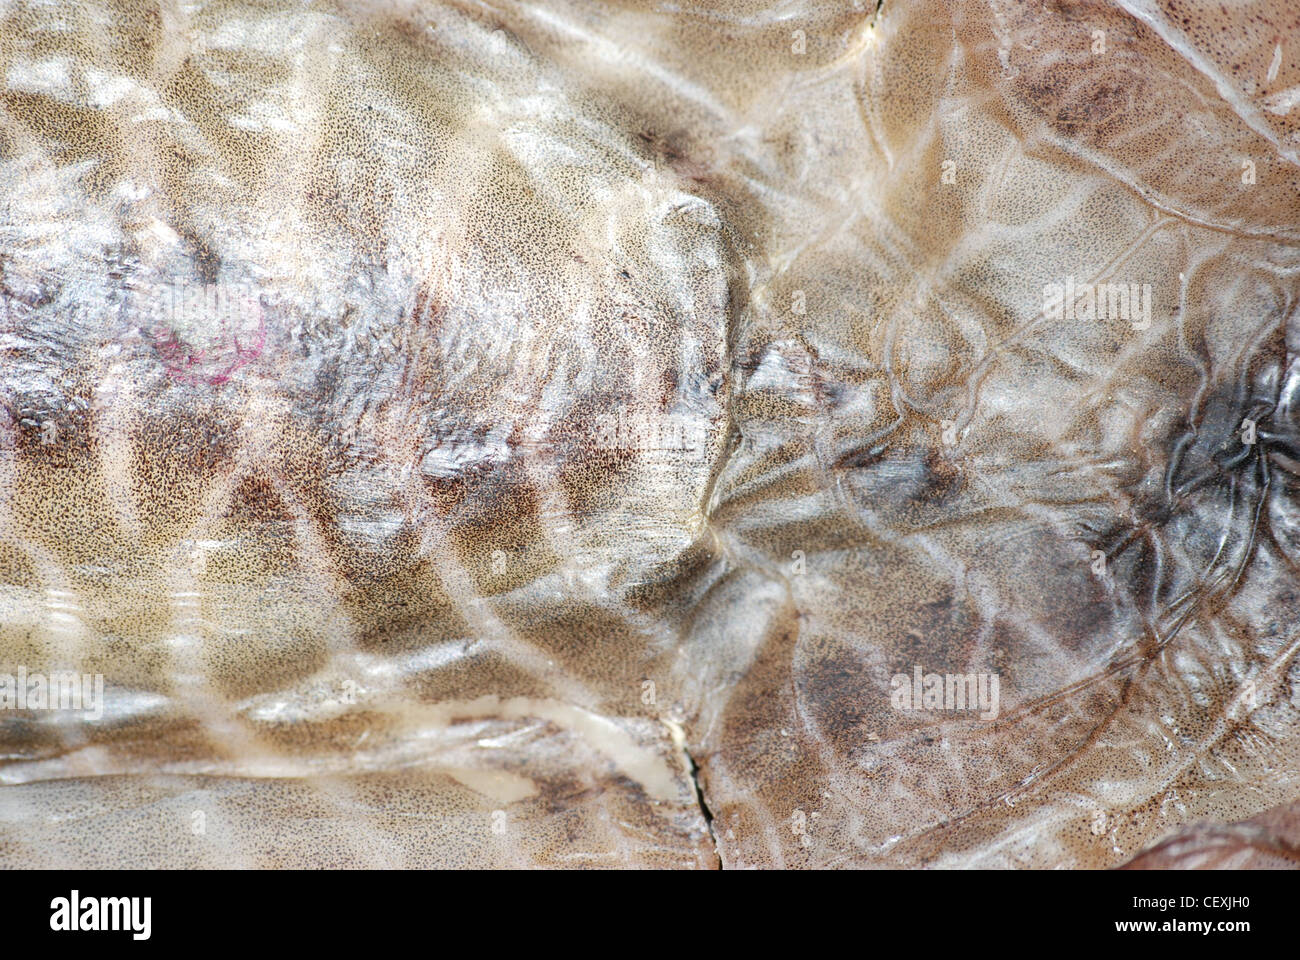 Cuttle fish skin texture Stock Photo